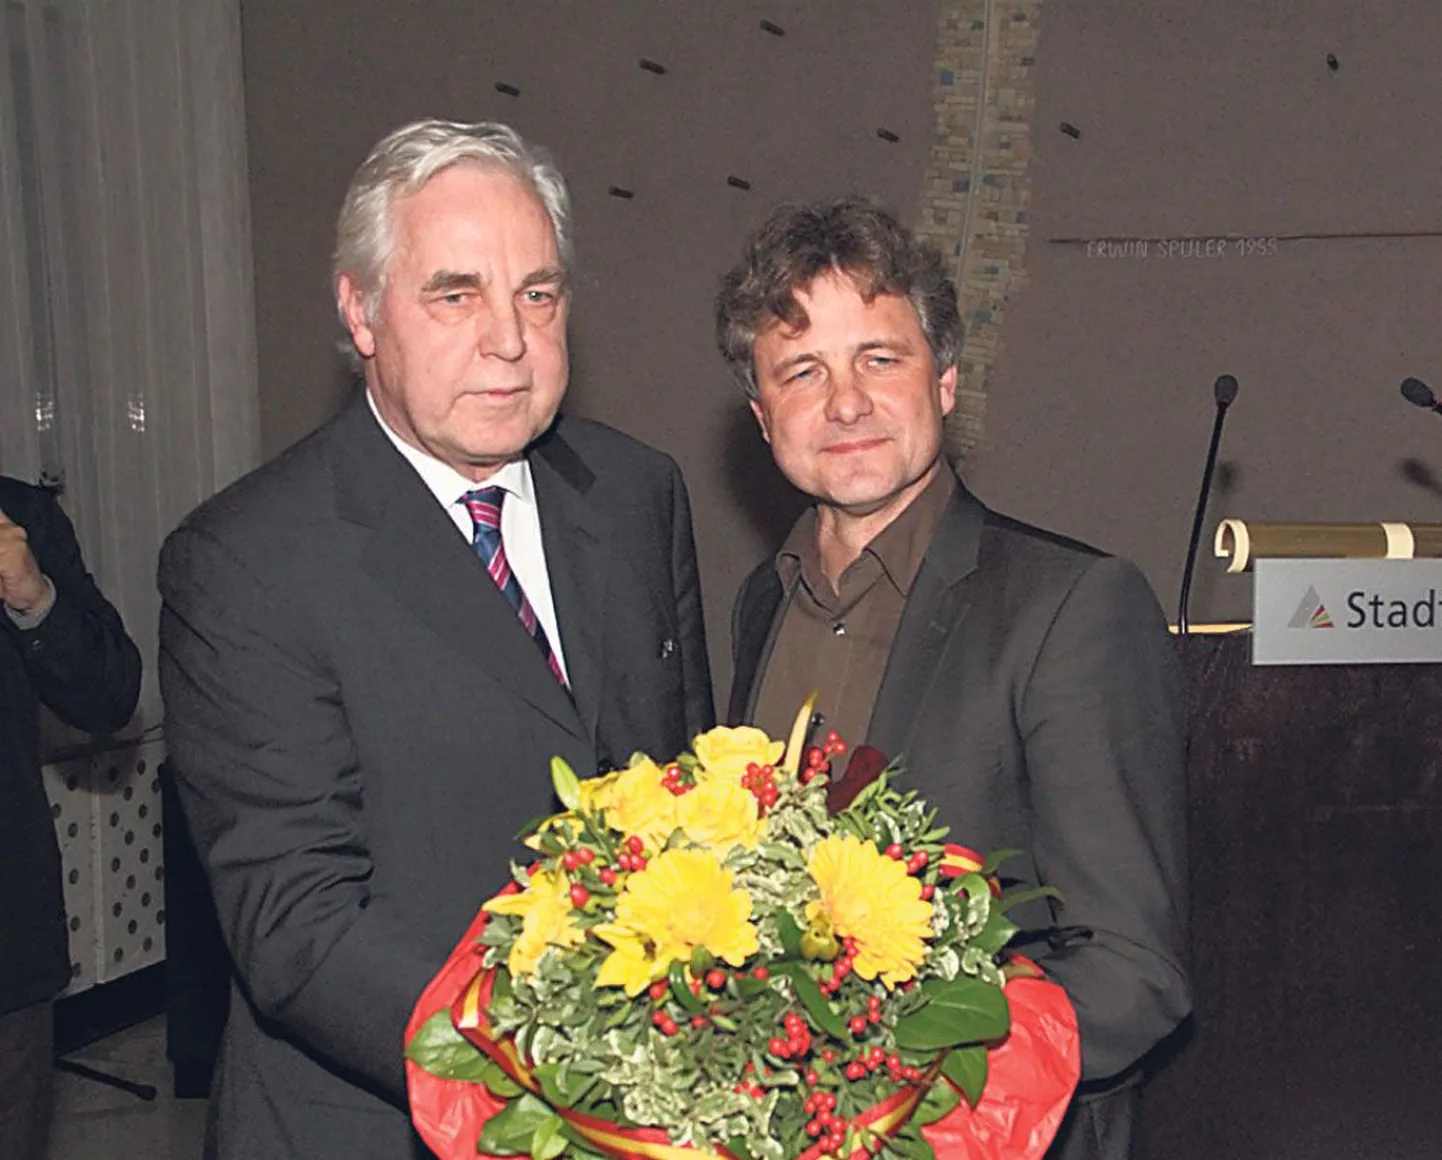 Karlsruhe lahkuv ülemlinnapea Heinz Fenrich (CDU, vasakul) ja uus lordmeer dr Frank Mentrup (SPD).